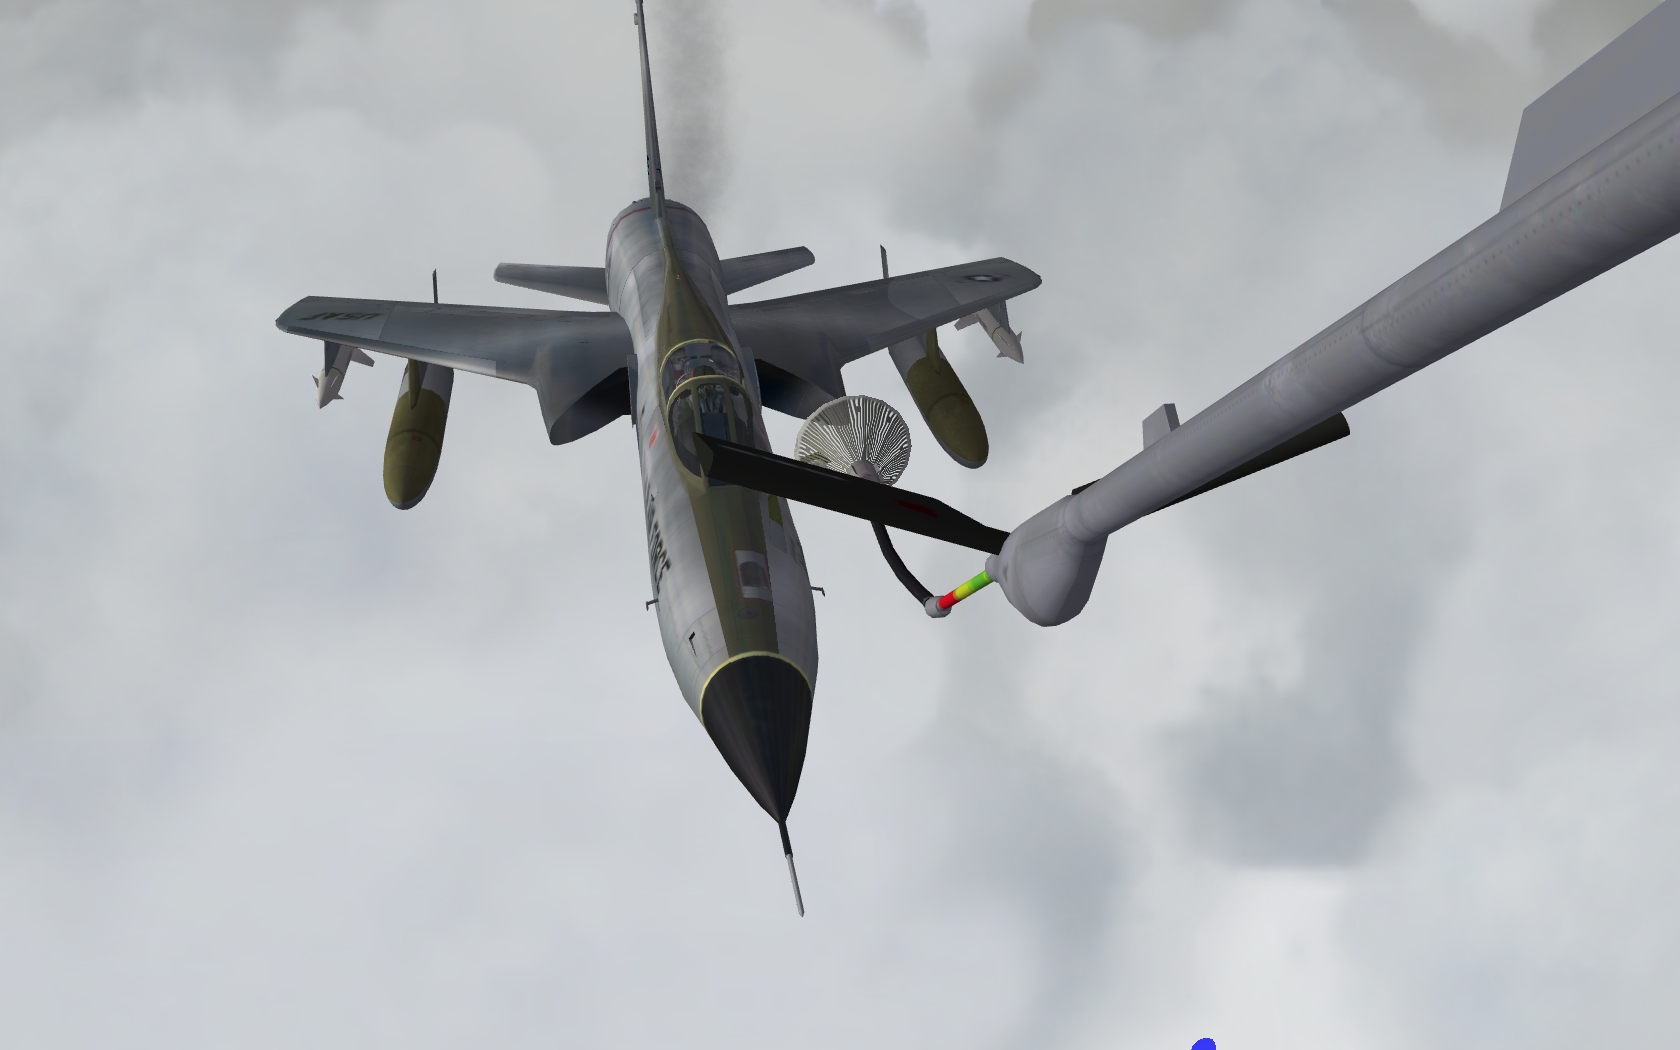 Introducing Aerial refueling